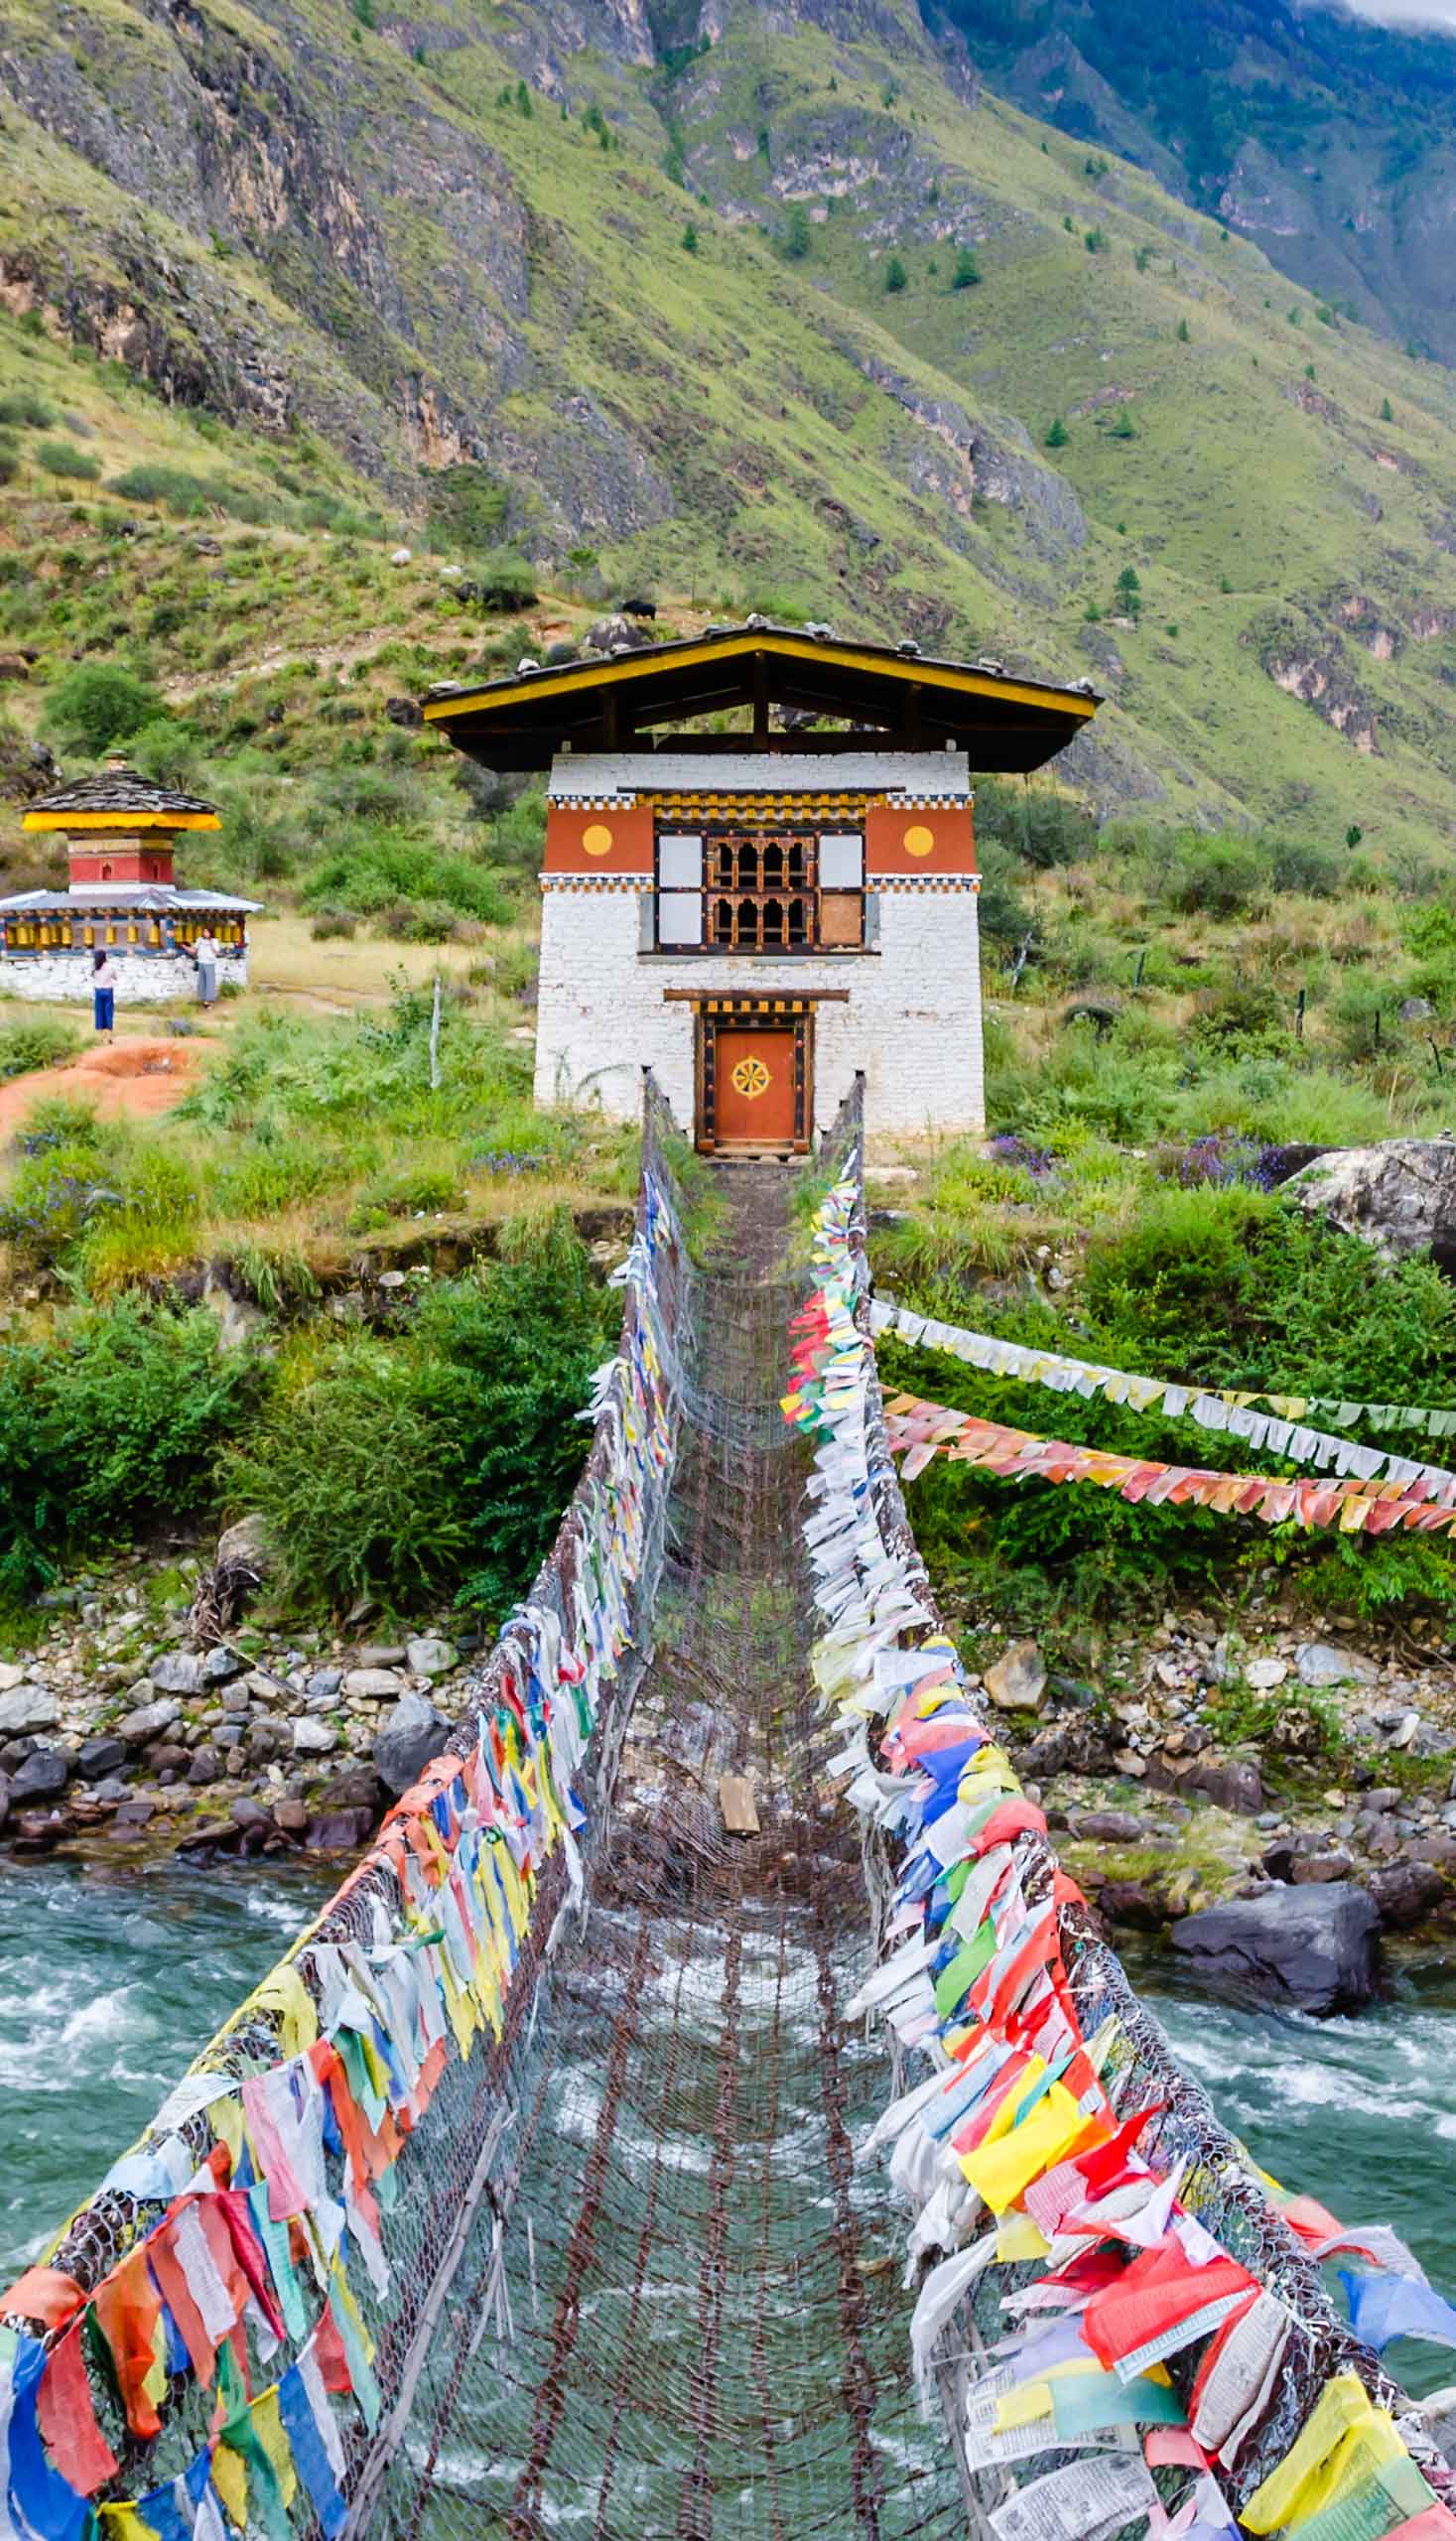 Iron Chain Bridge of Tachog Lhakhang Monastery, Paro River, Bhutan.